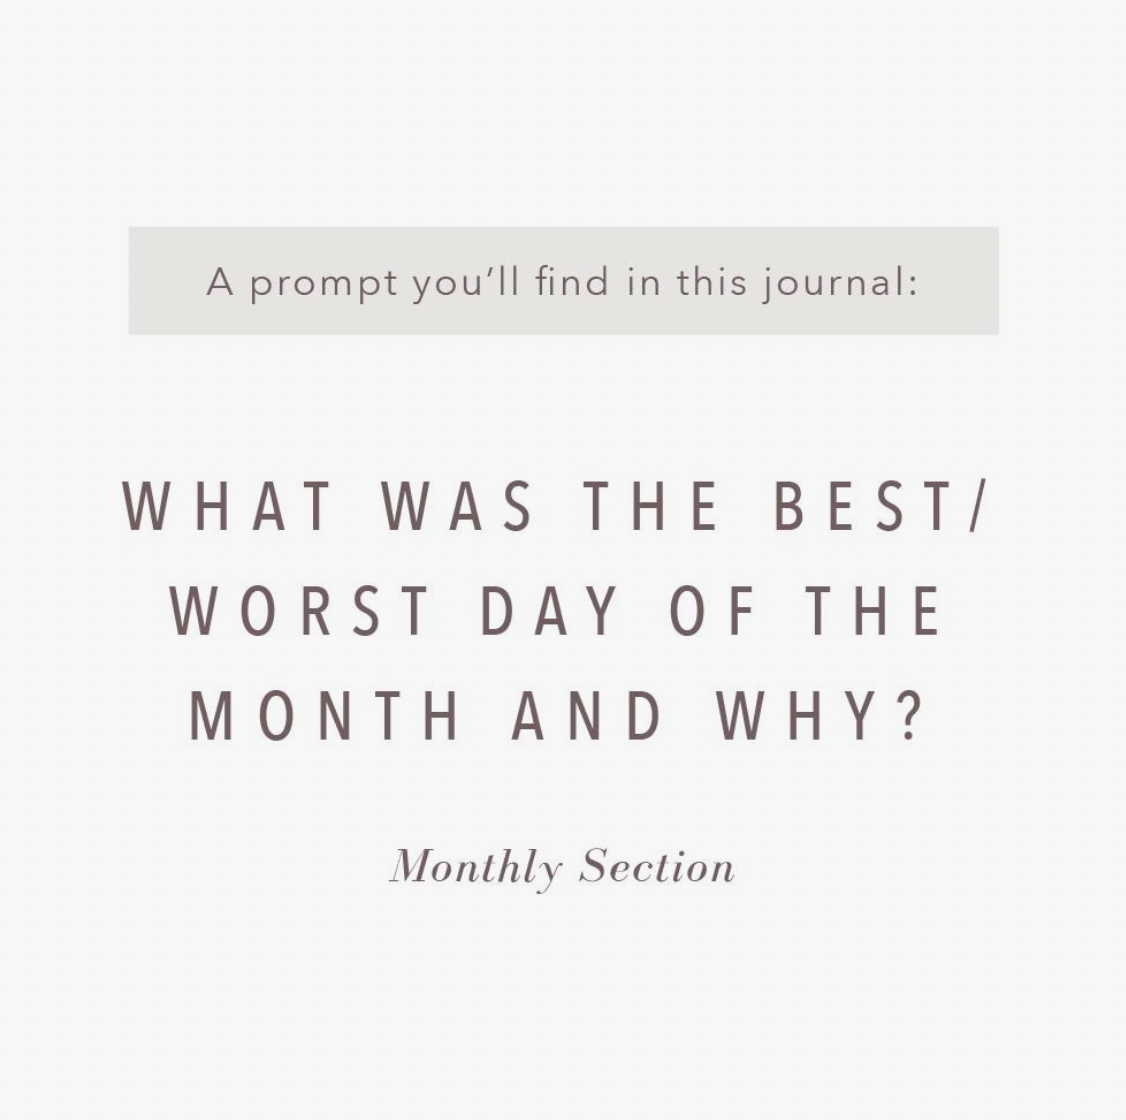 My Healing Journey: Fertility Journal